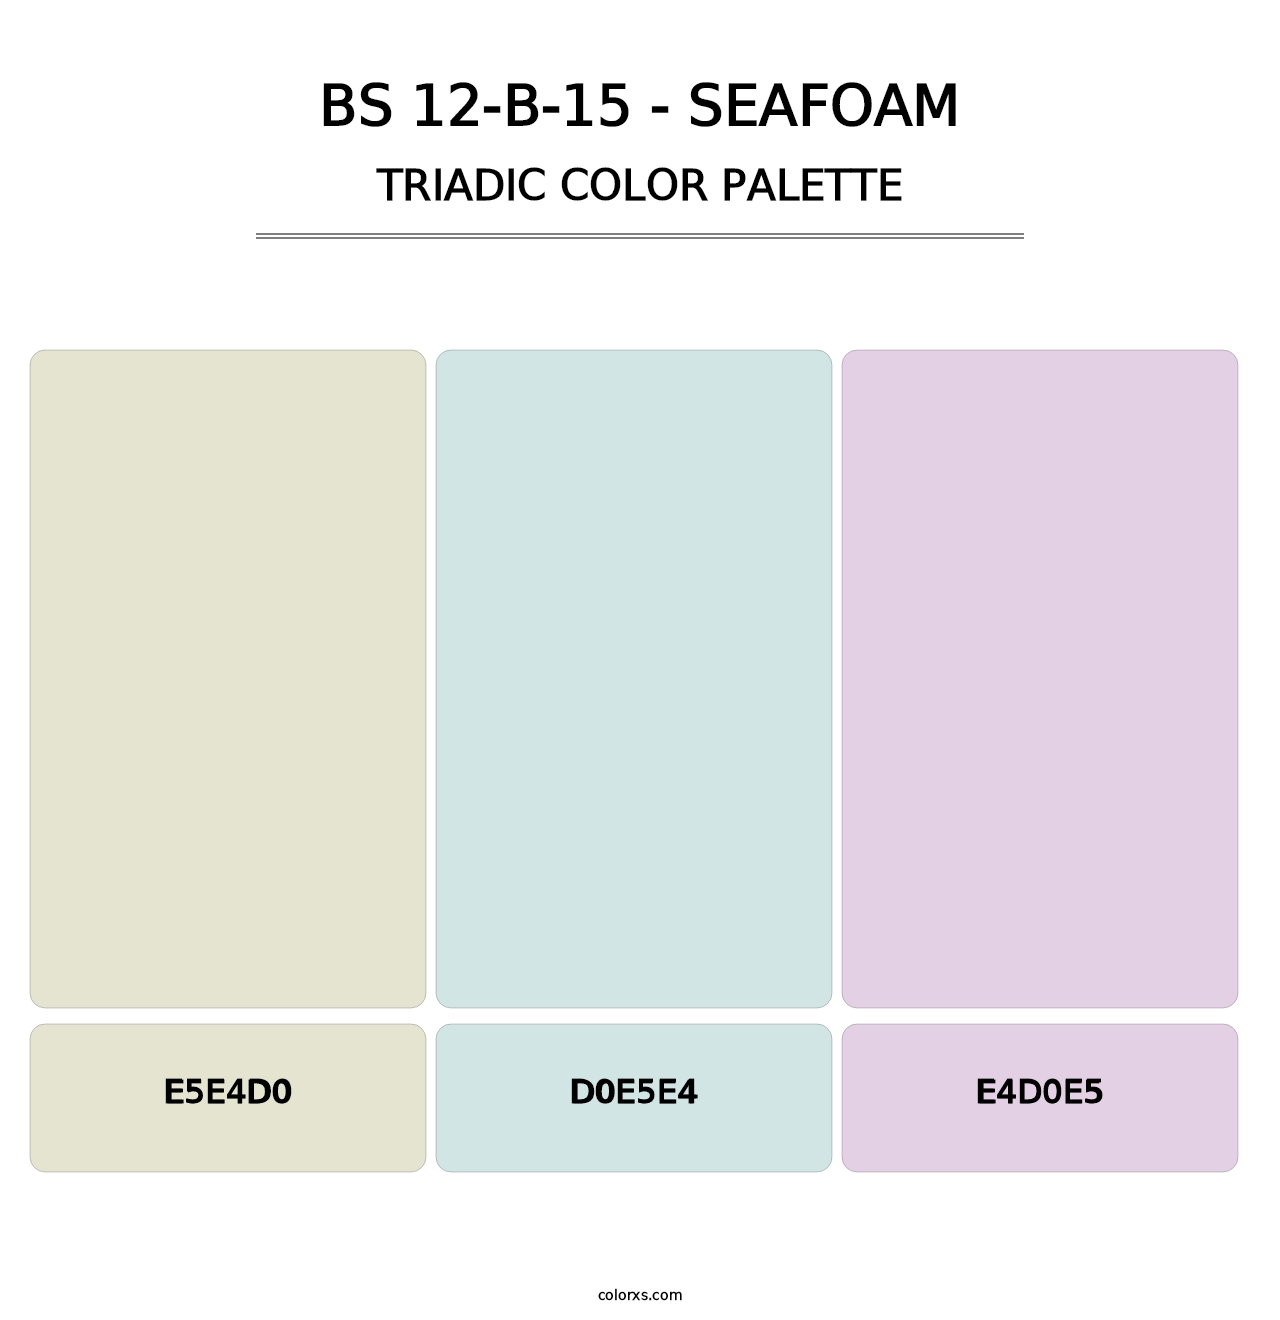 BS 12-B-15 - Seafoam - Triadic Color Palette